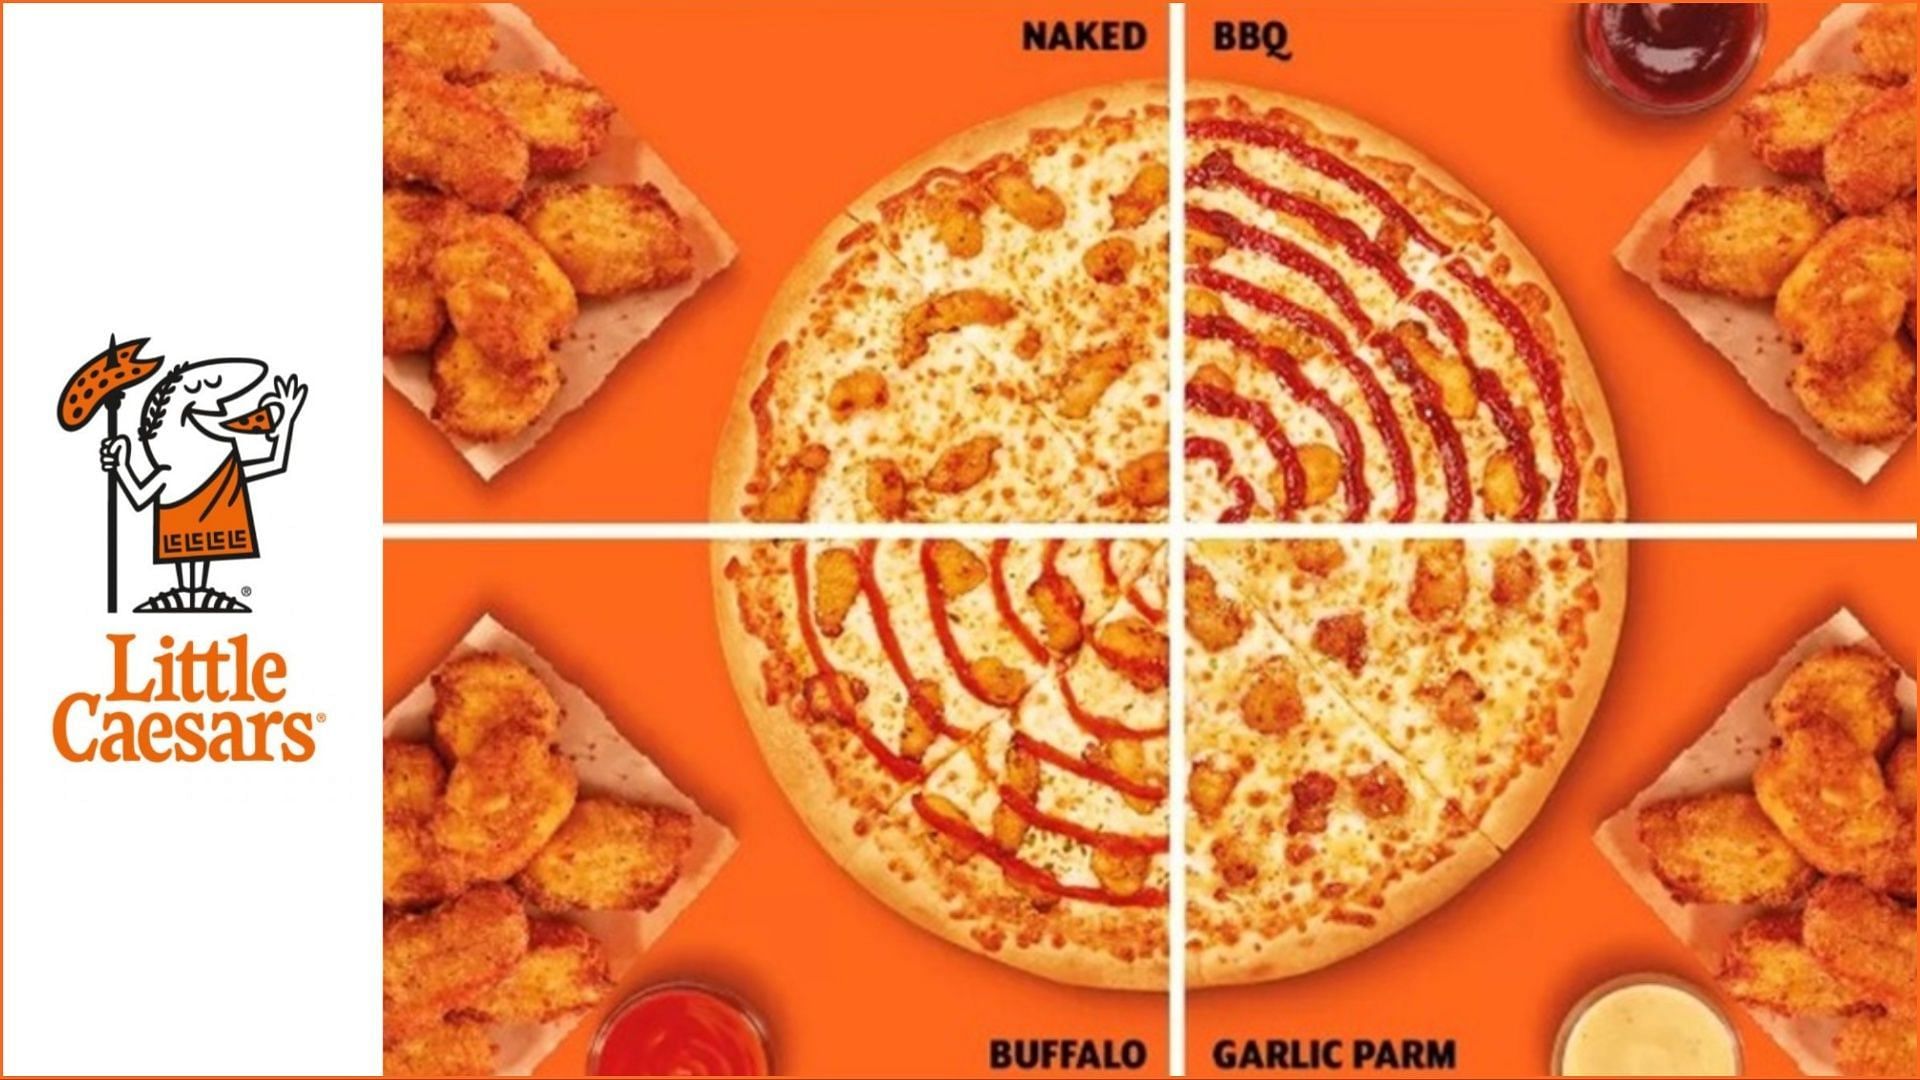 Little Caesars brings back Crispy Chicken Pizzas to select locations (Image via Little Caesars)